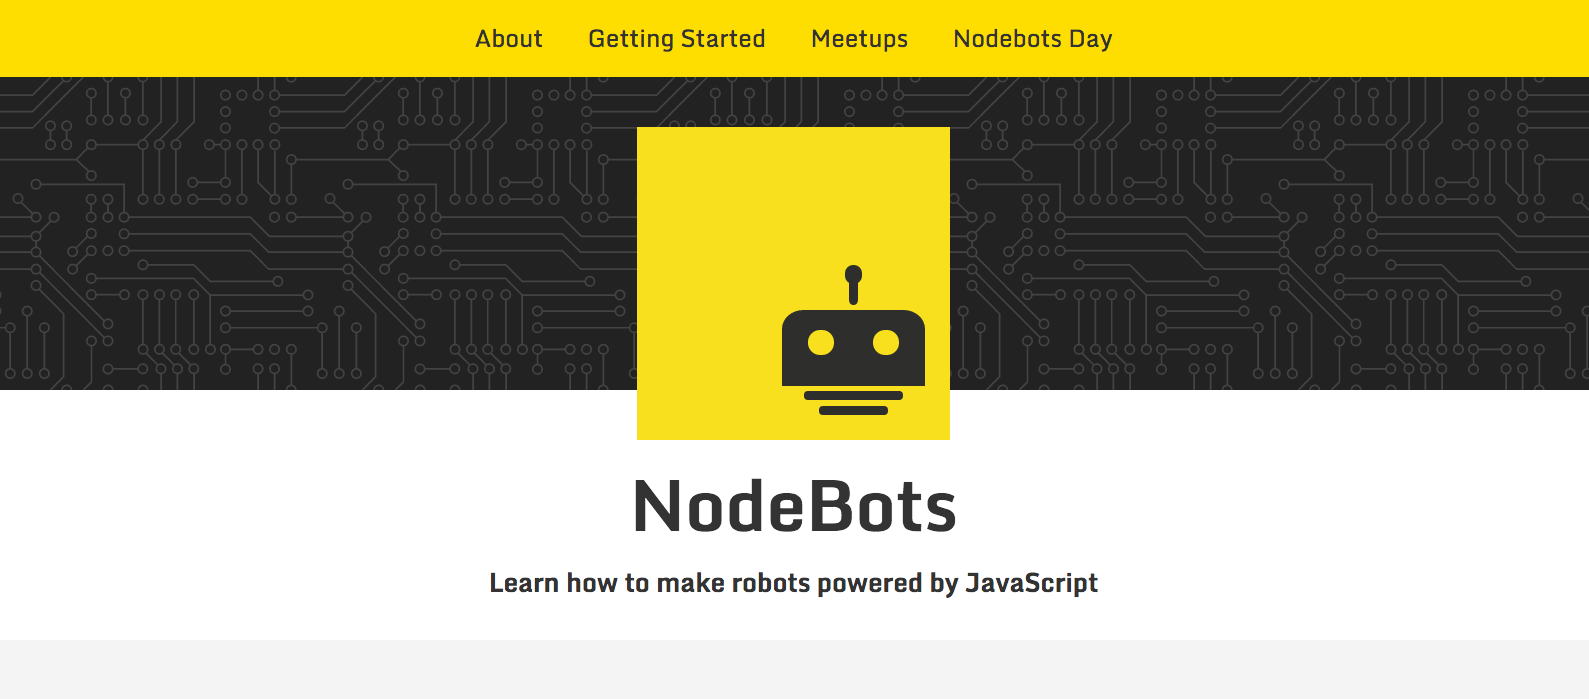 nodebots website